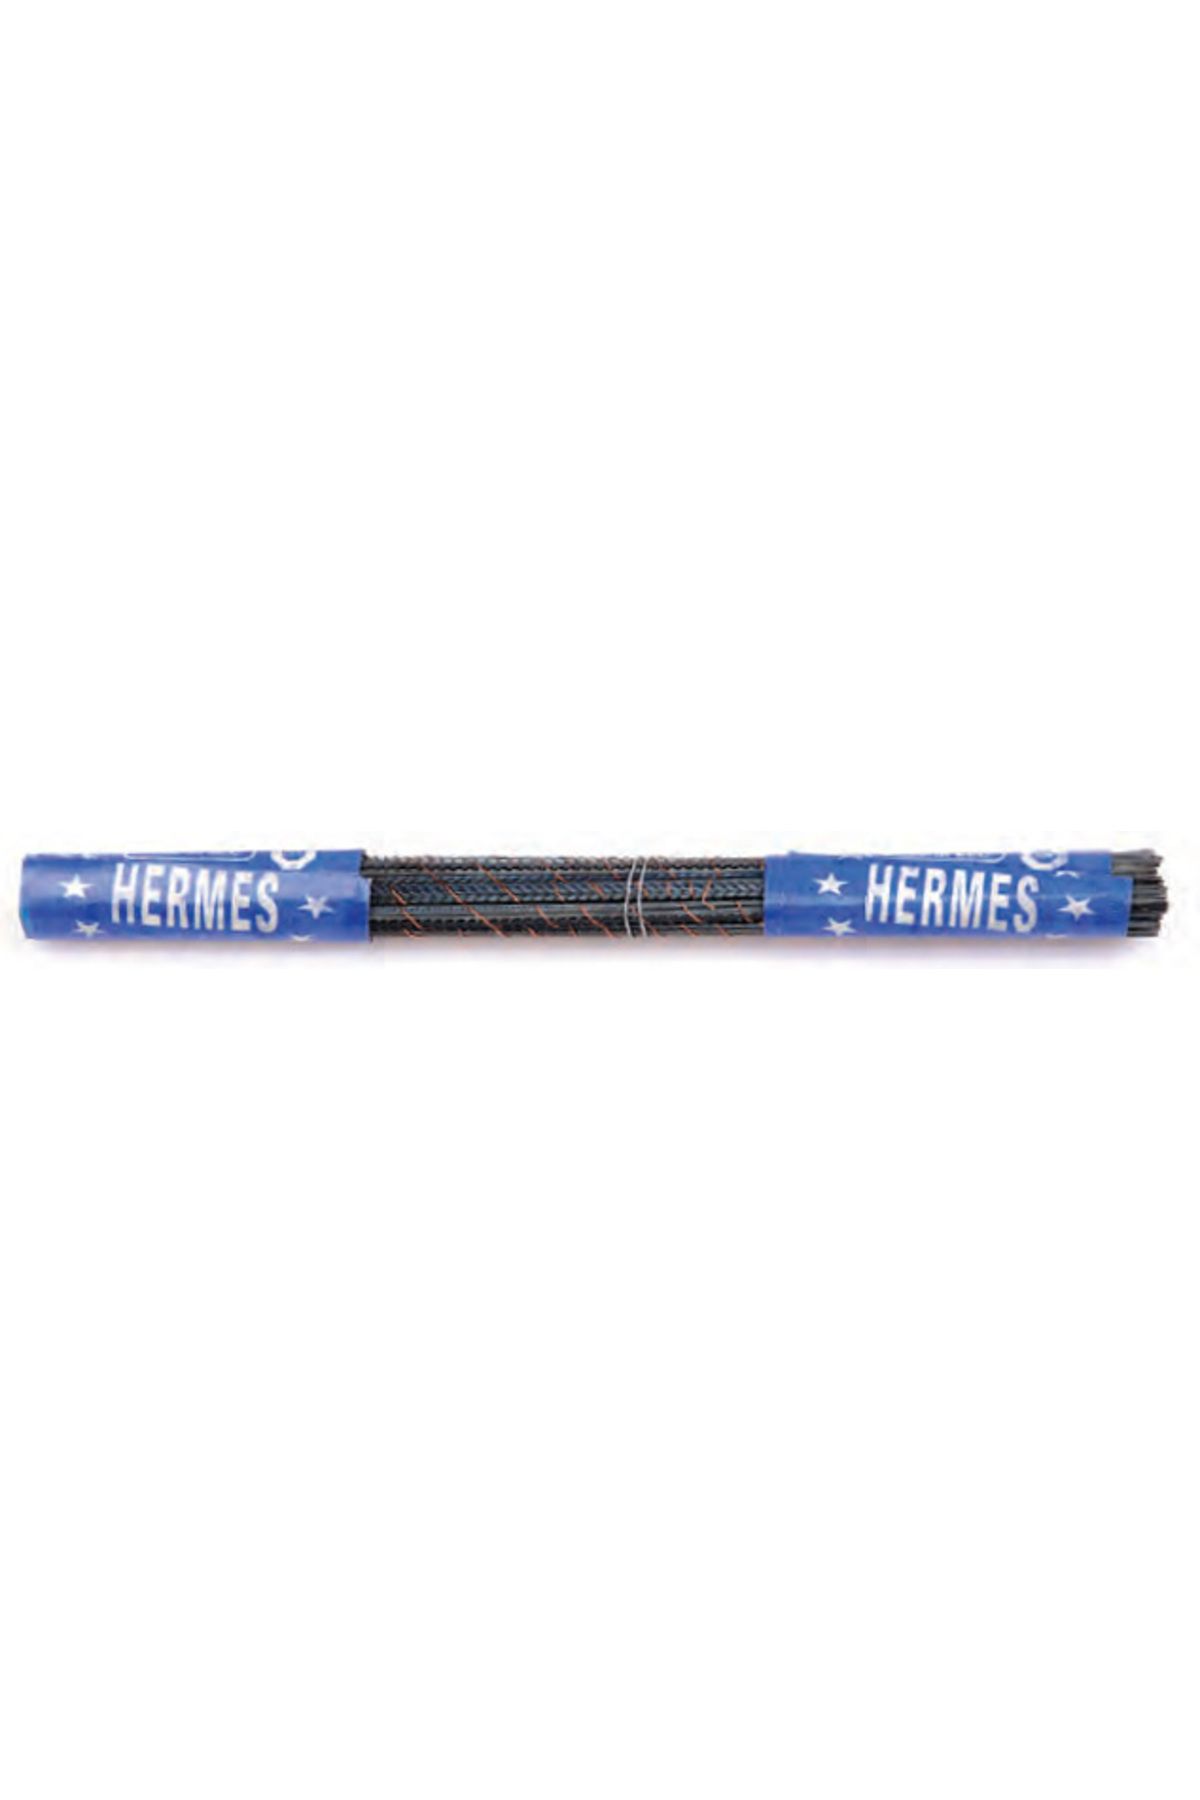 Hermes Eltos Kıl Testere Ağzı 144 Adet - No:4